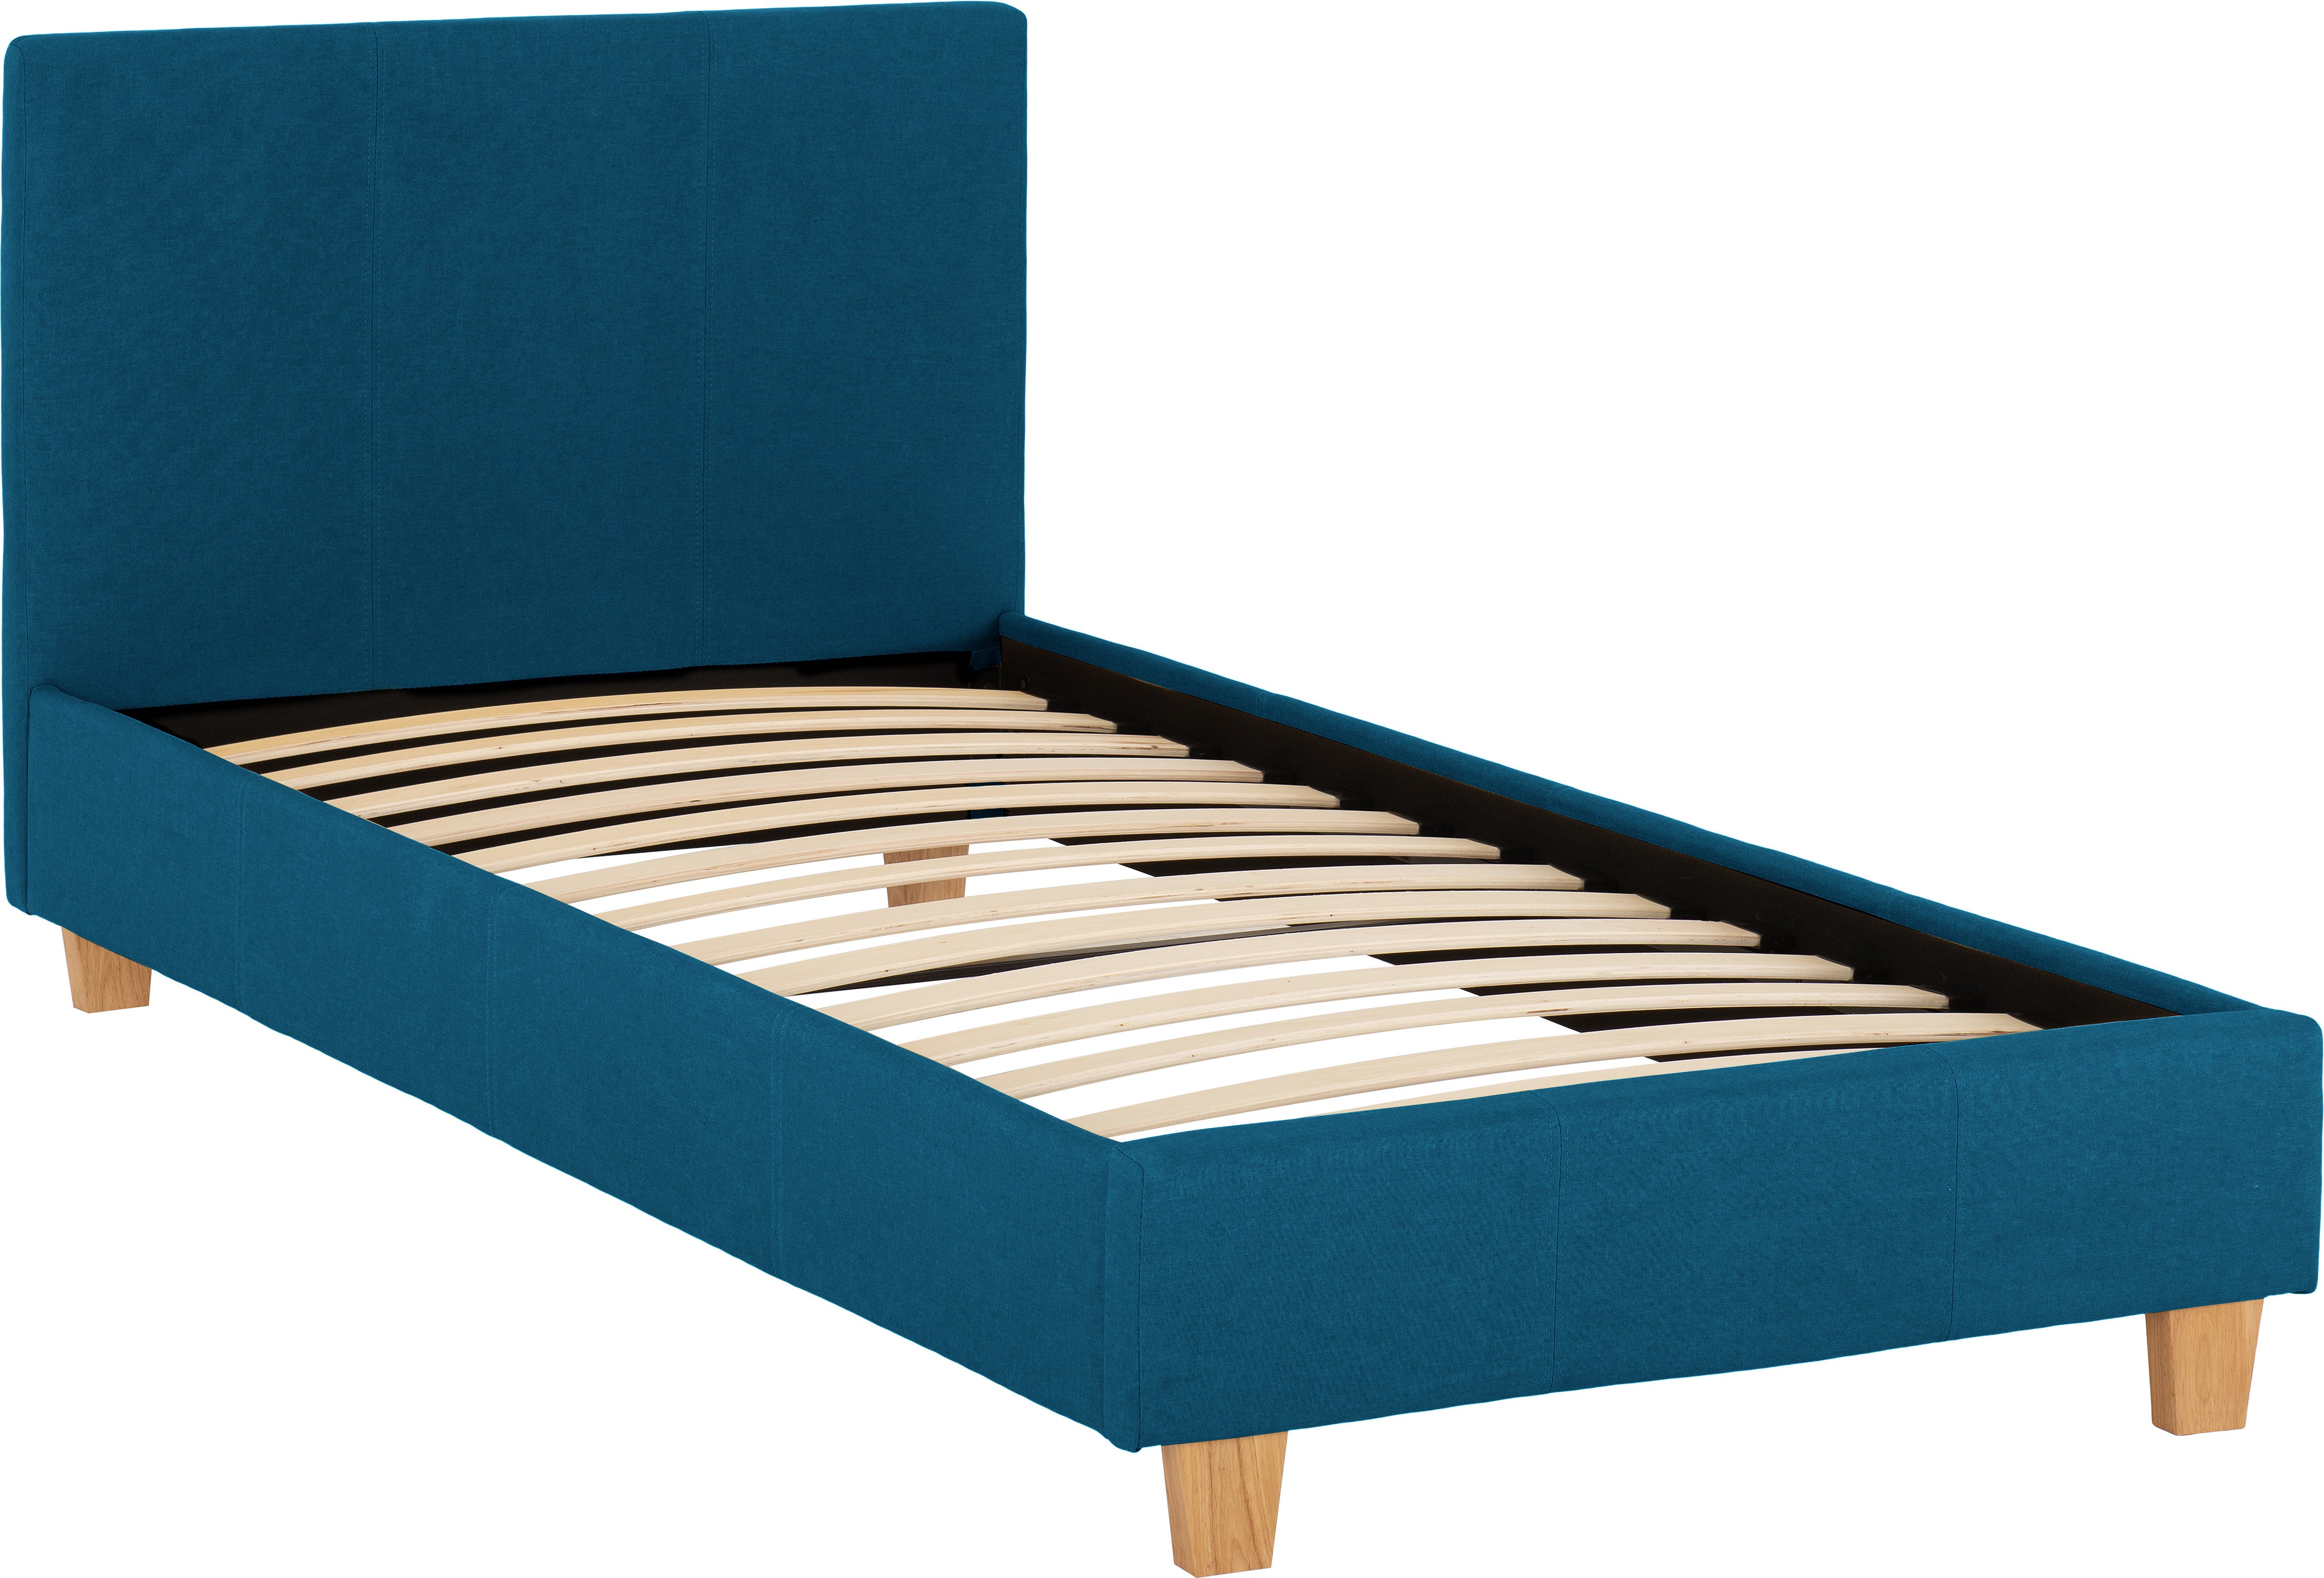 Prado 3' Bed